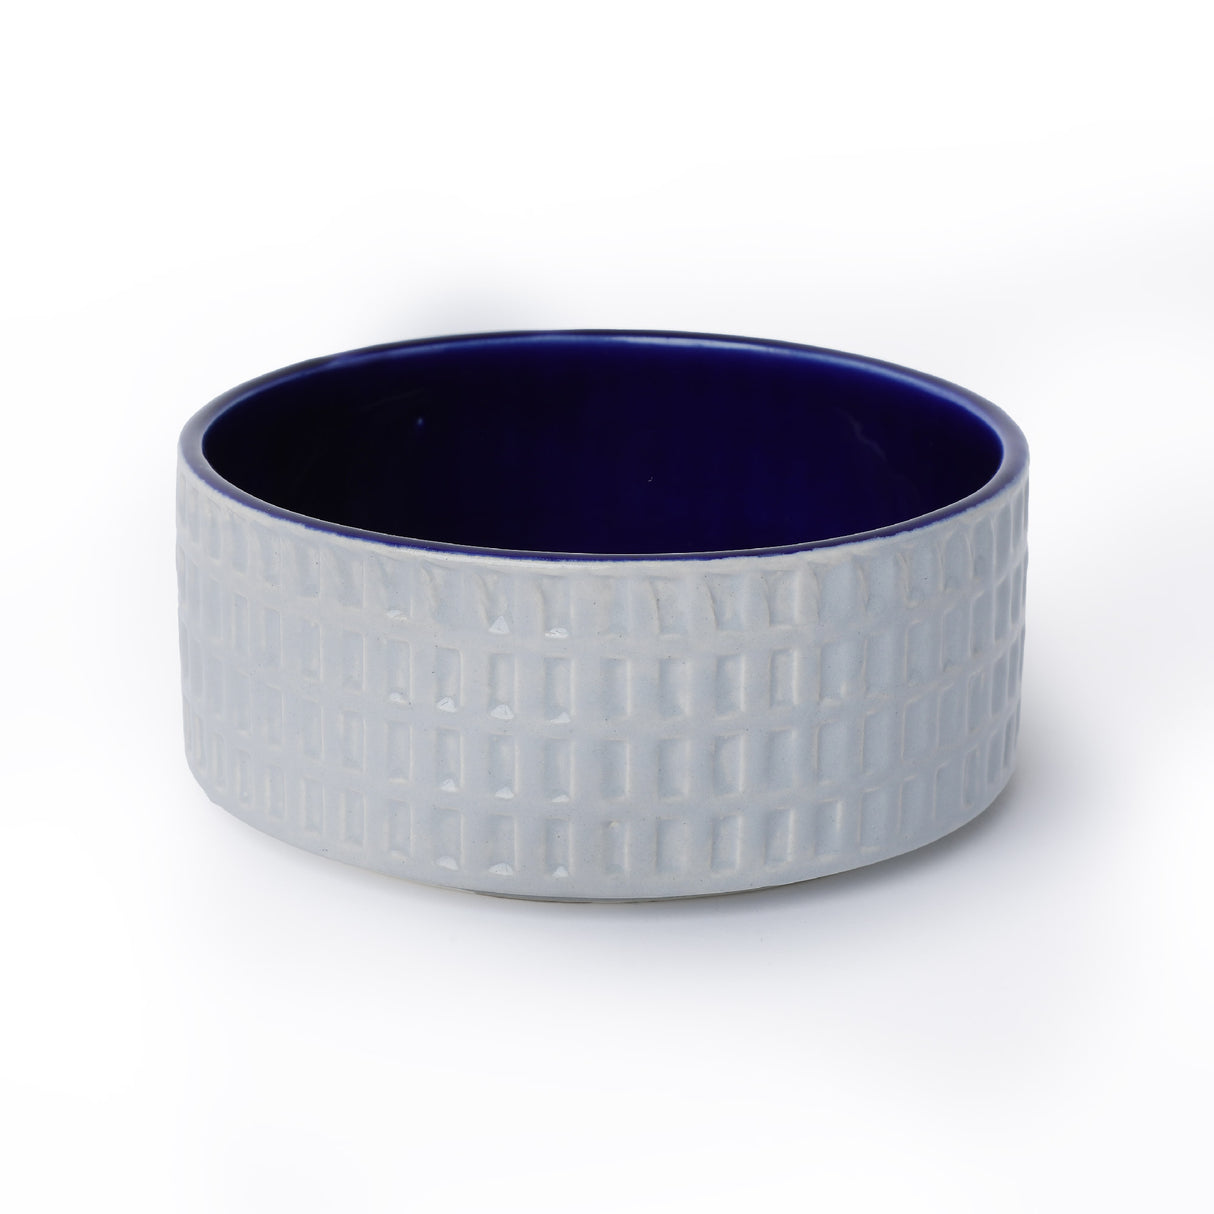 Dual Tone Grey and deep purple Textured Ceramic Serving Bowl set of 3